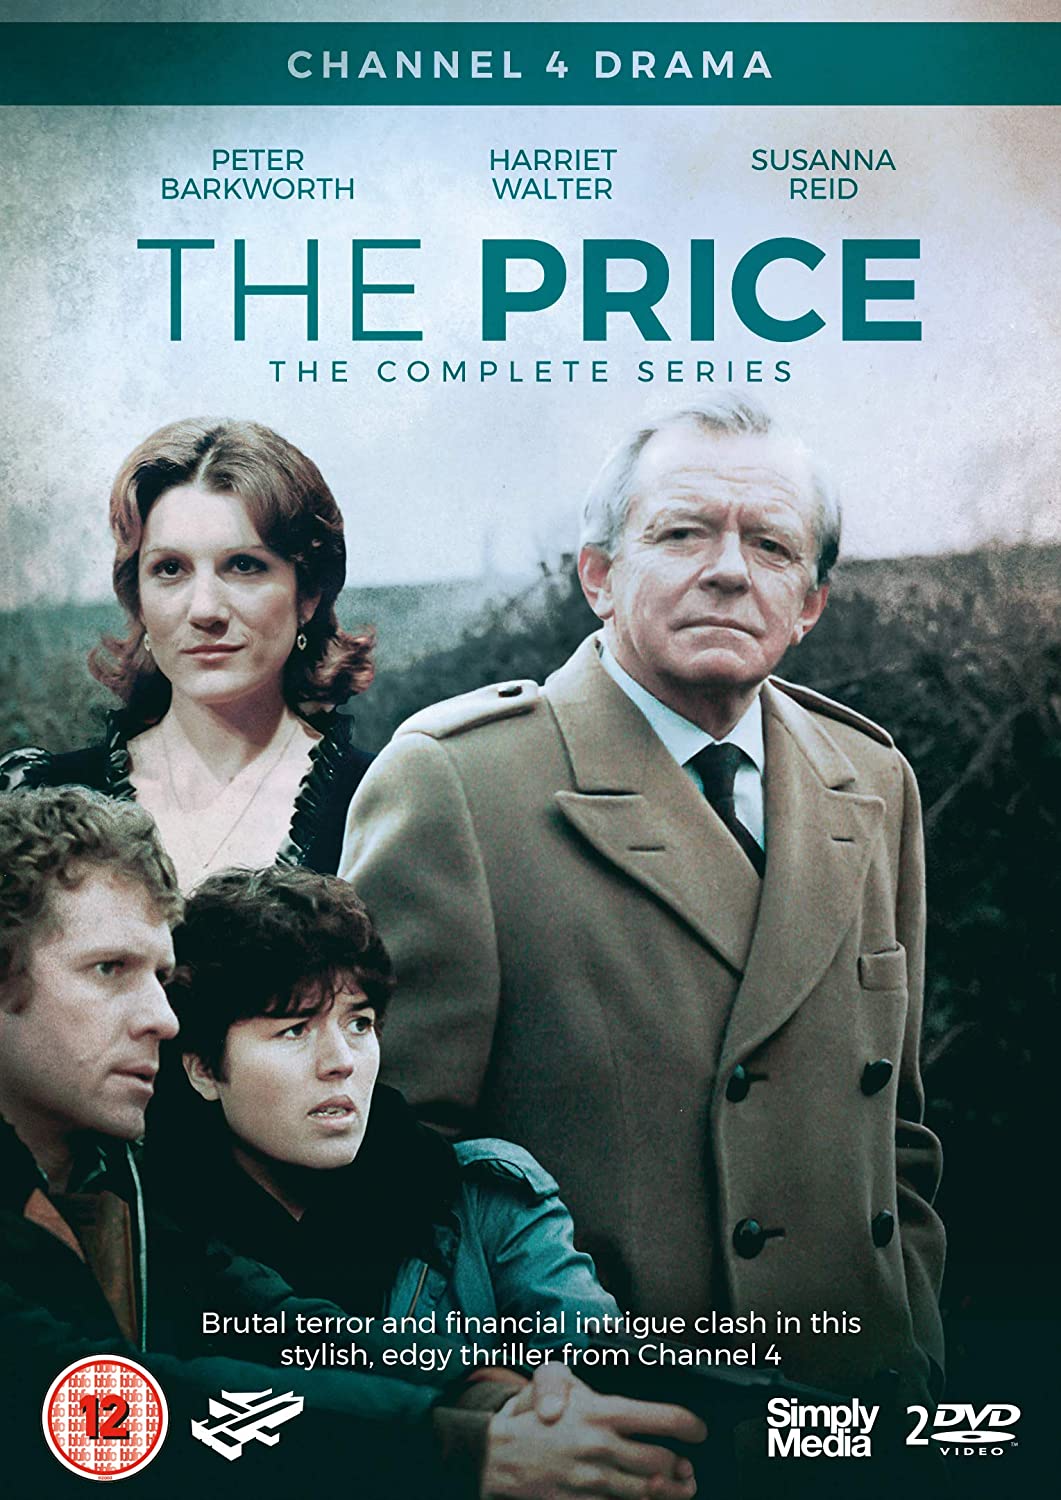 The Price – Die komplette Serie – Channel 4 Drama [DVD]